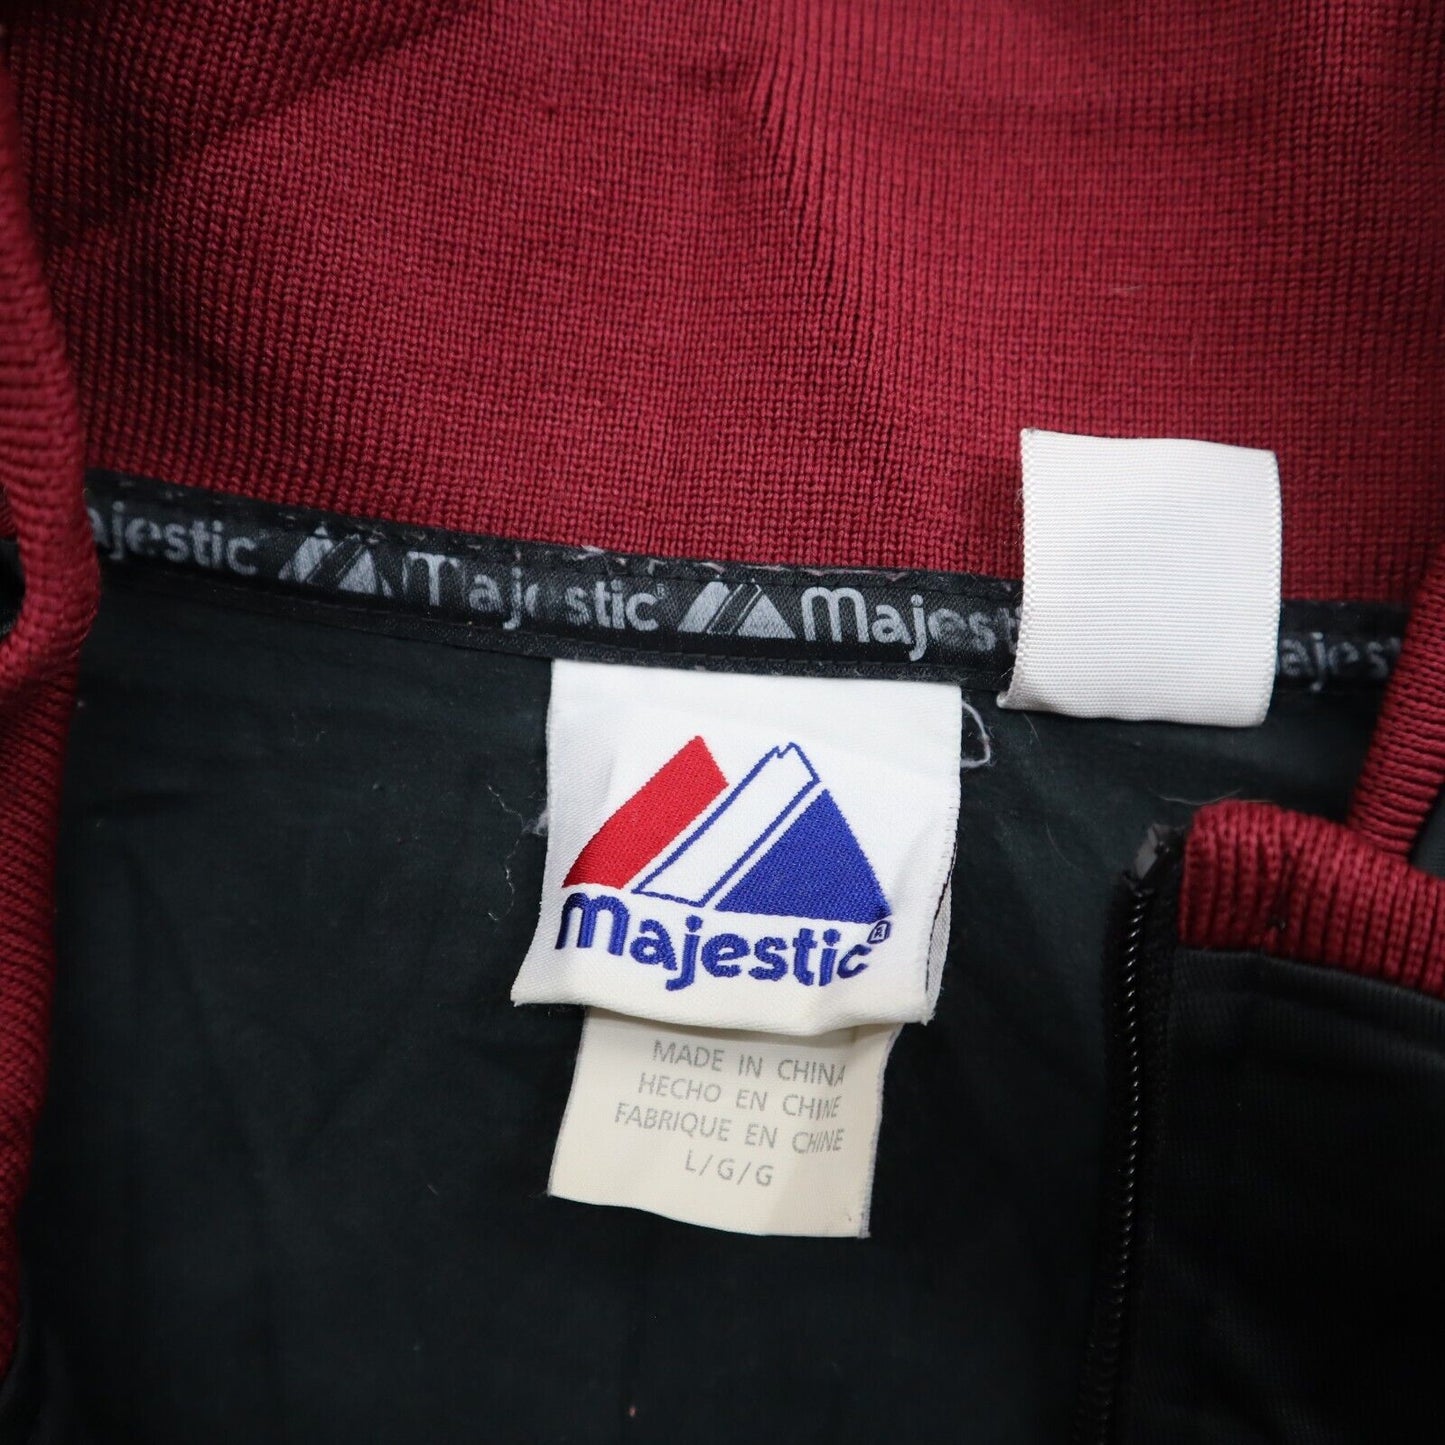 Majestic Mens Activewear Jacket Full Zip Mock Neck Long Sleeve Black Red White L